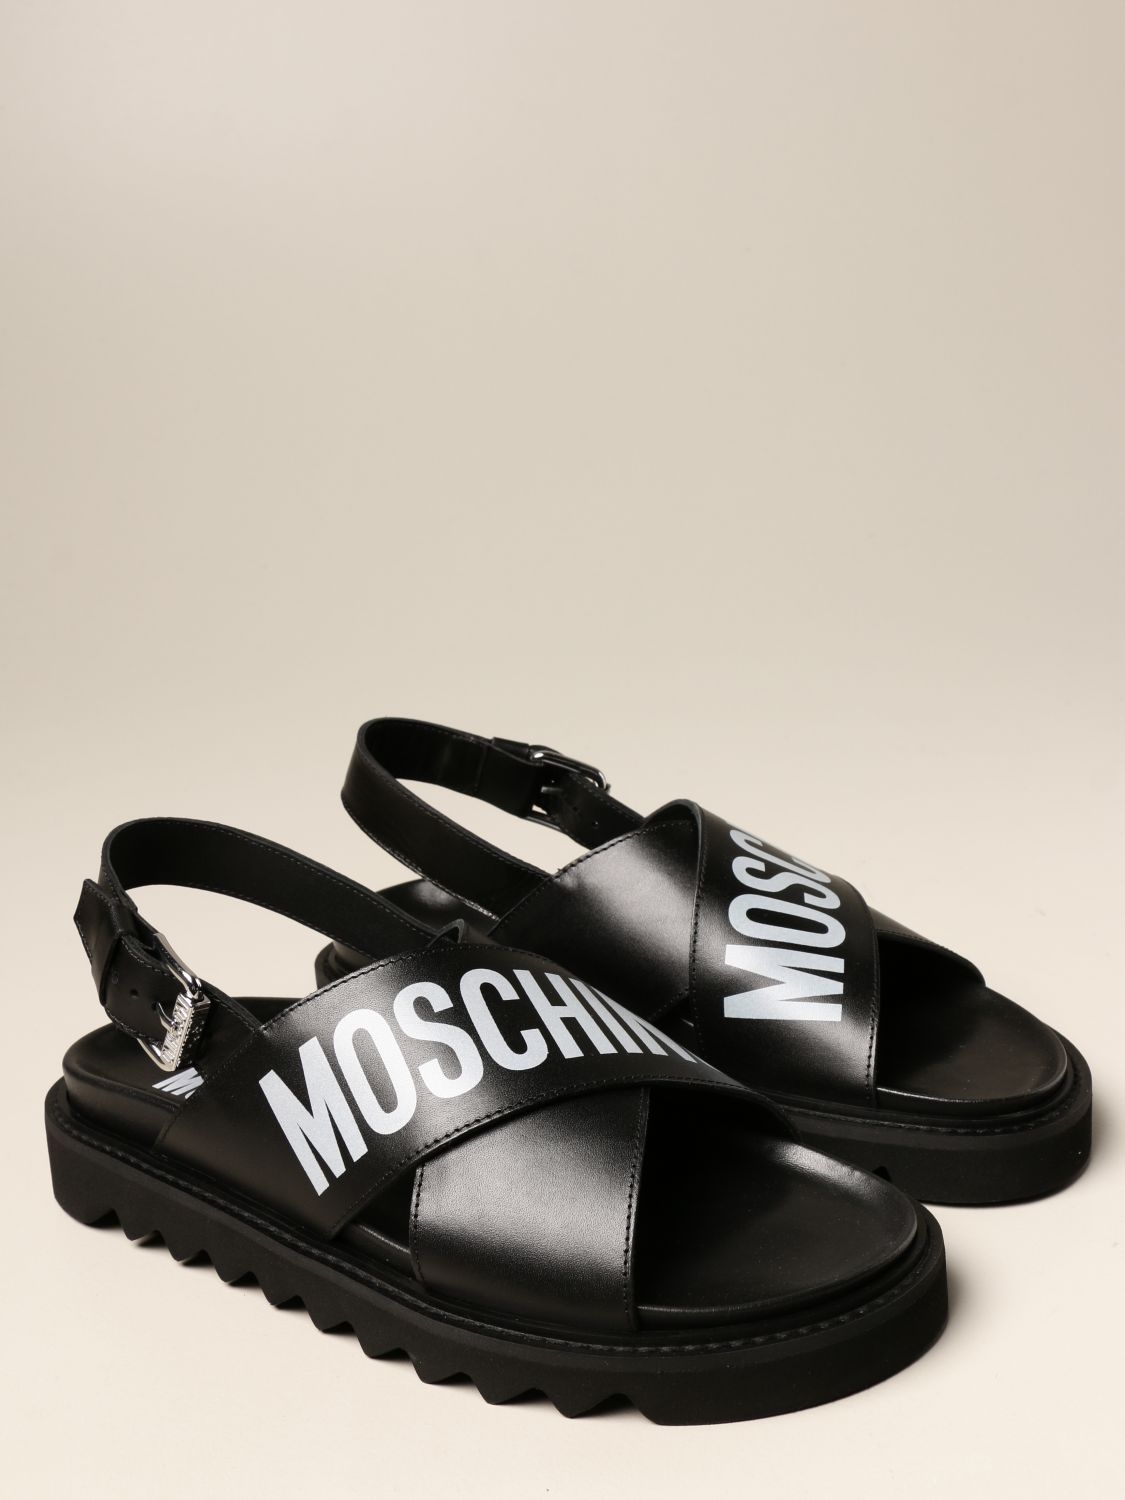 Moschino Sandals Top Sellers, 60% OFF | www.ingeniovirtual.com